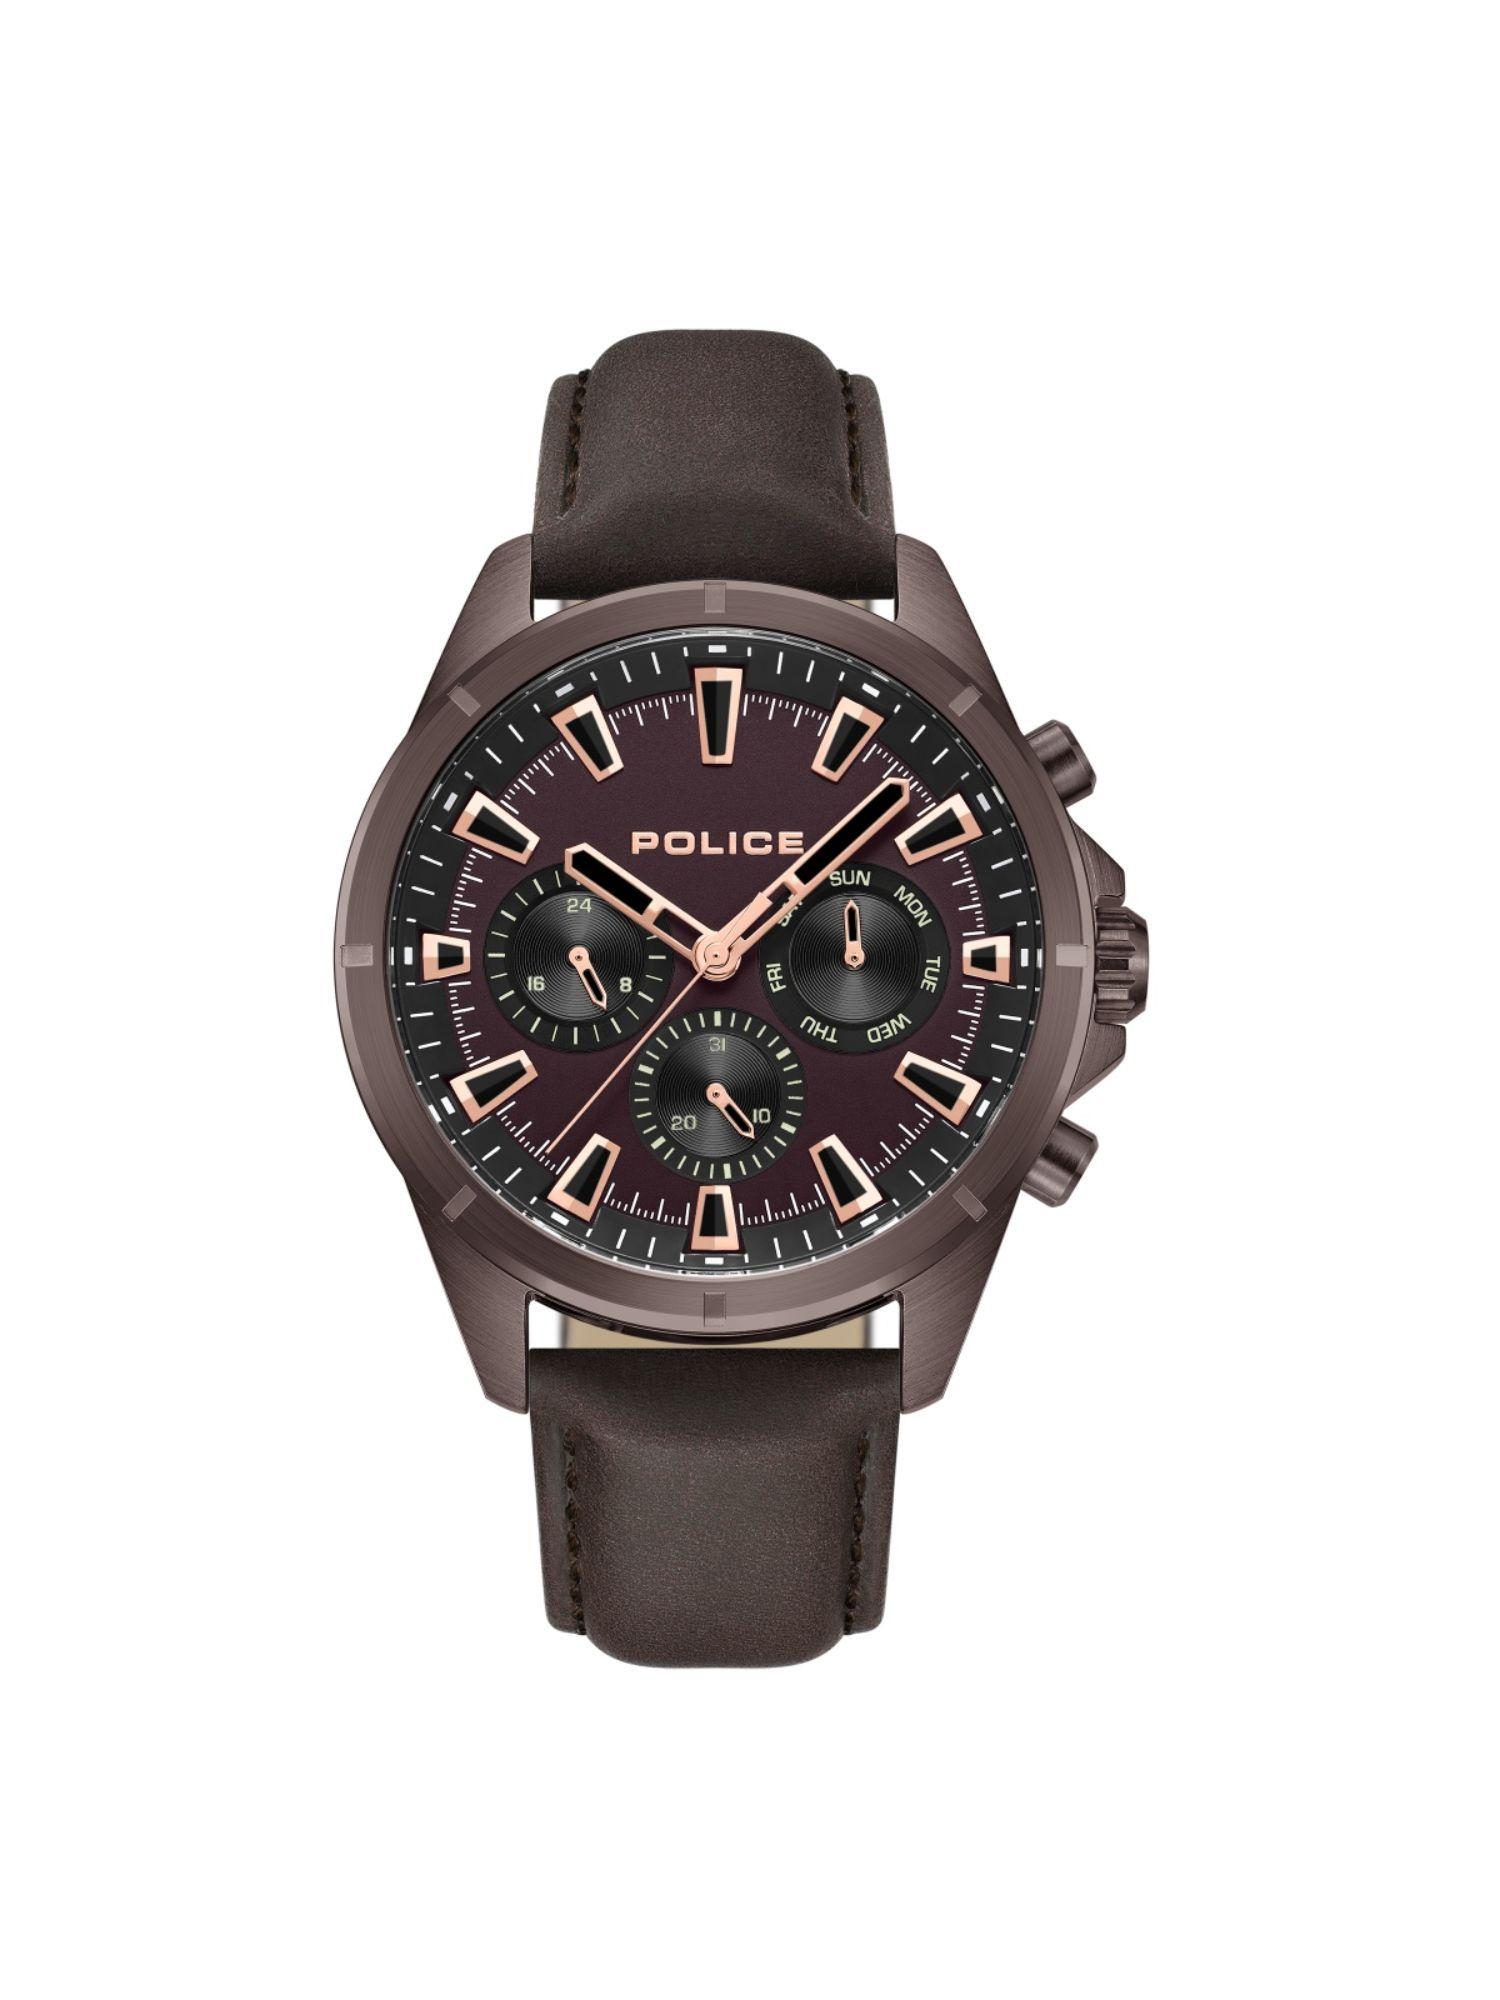 plpewjf0005802 maroon dial analog watch for men